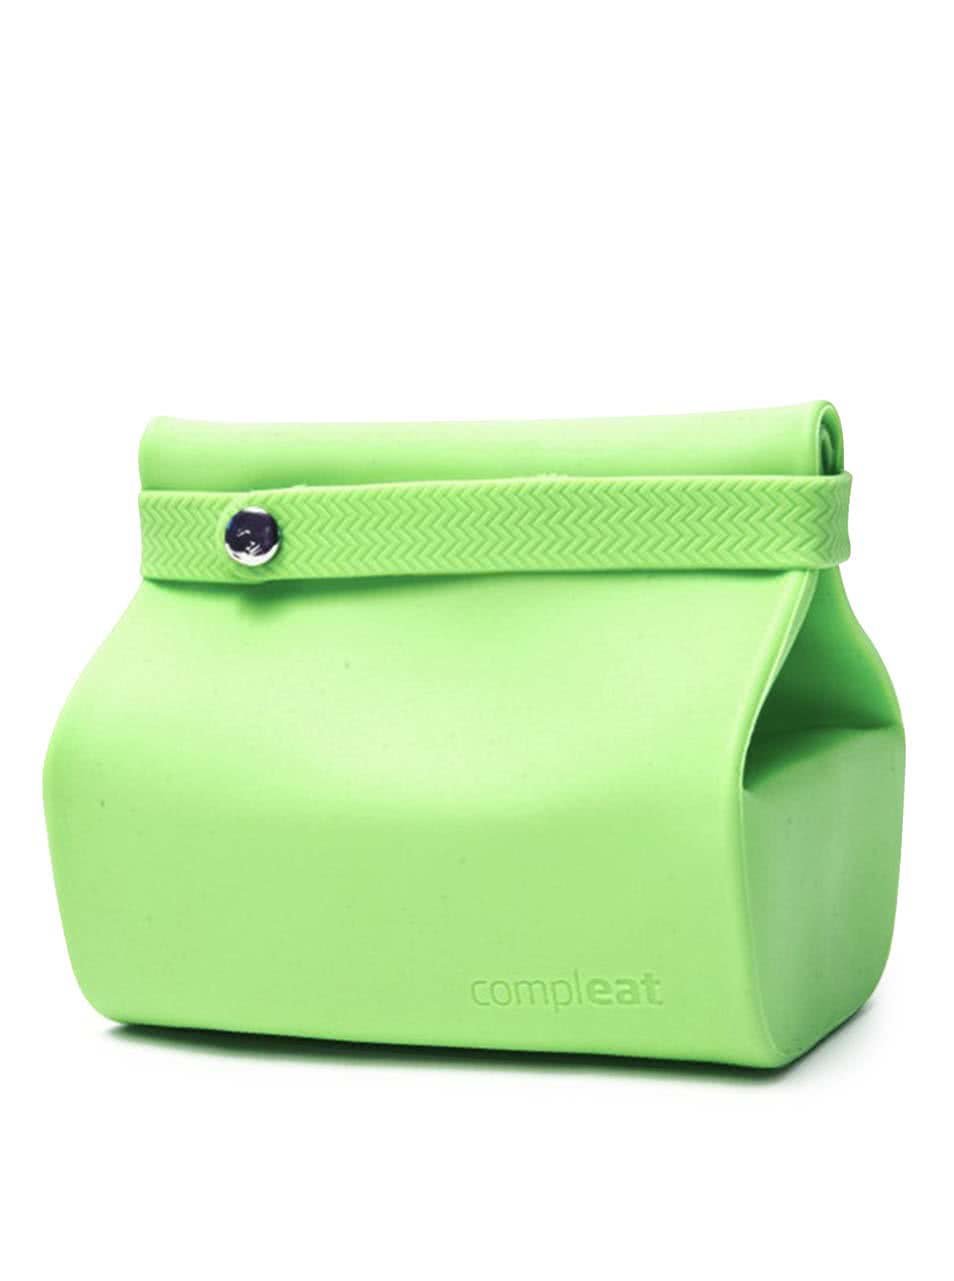 Zelený silikonový pytlík na svačinu Compleat Foodbag